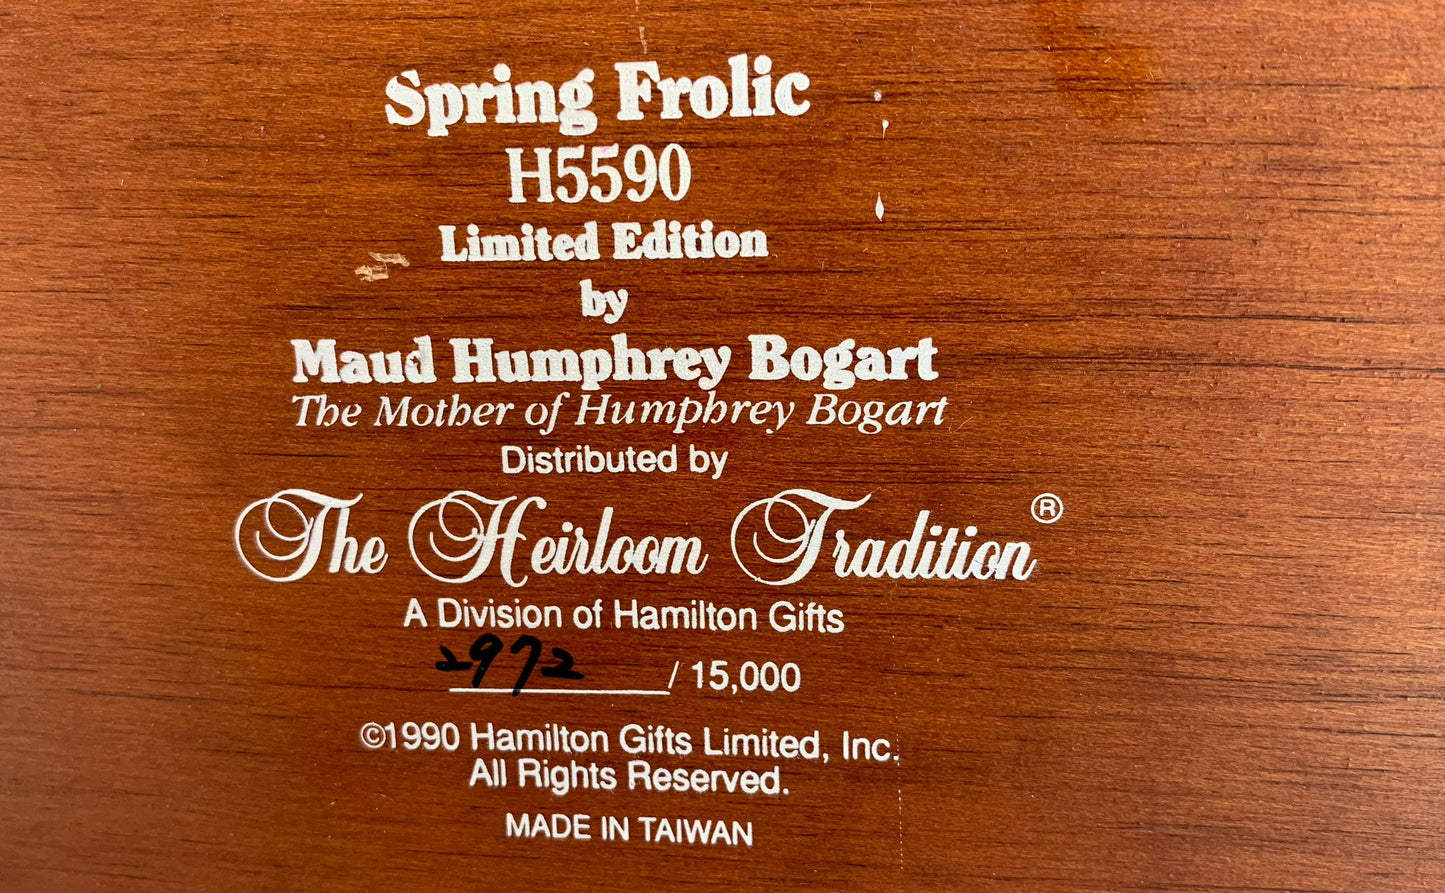 Maud Humphrey Bogart "Spring Frolic" Figurine HH5590 The Heirloom Tradition 1990